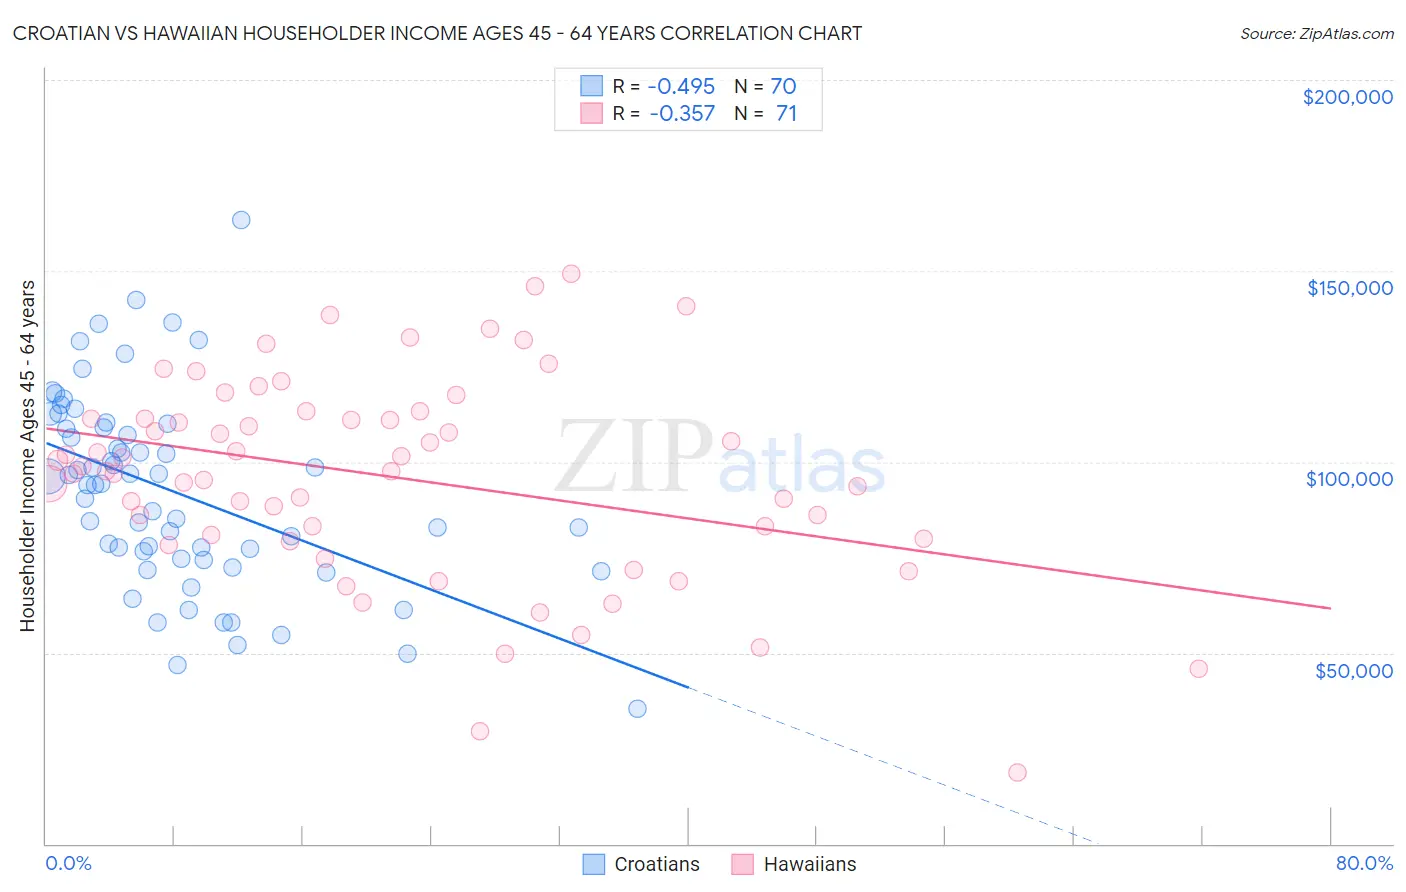 Croatian vs Hawaiian Householder Income Ages 45 - 64 years